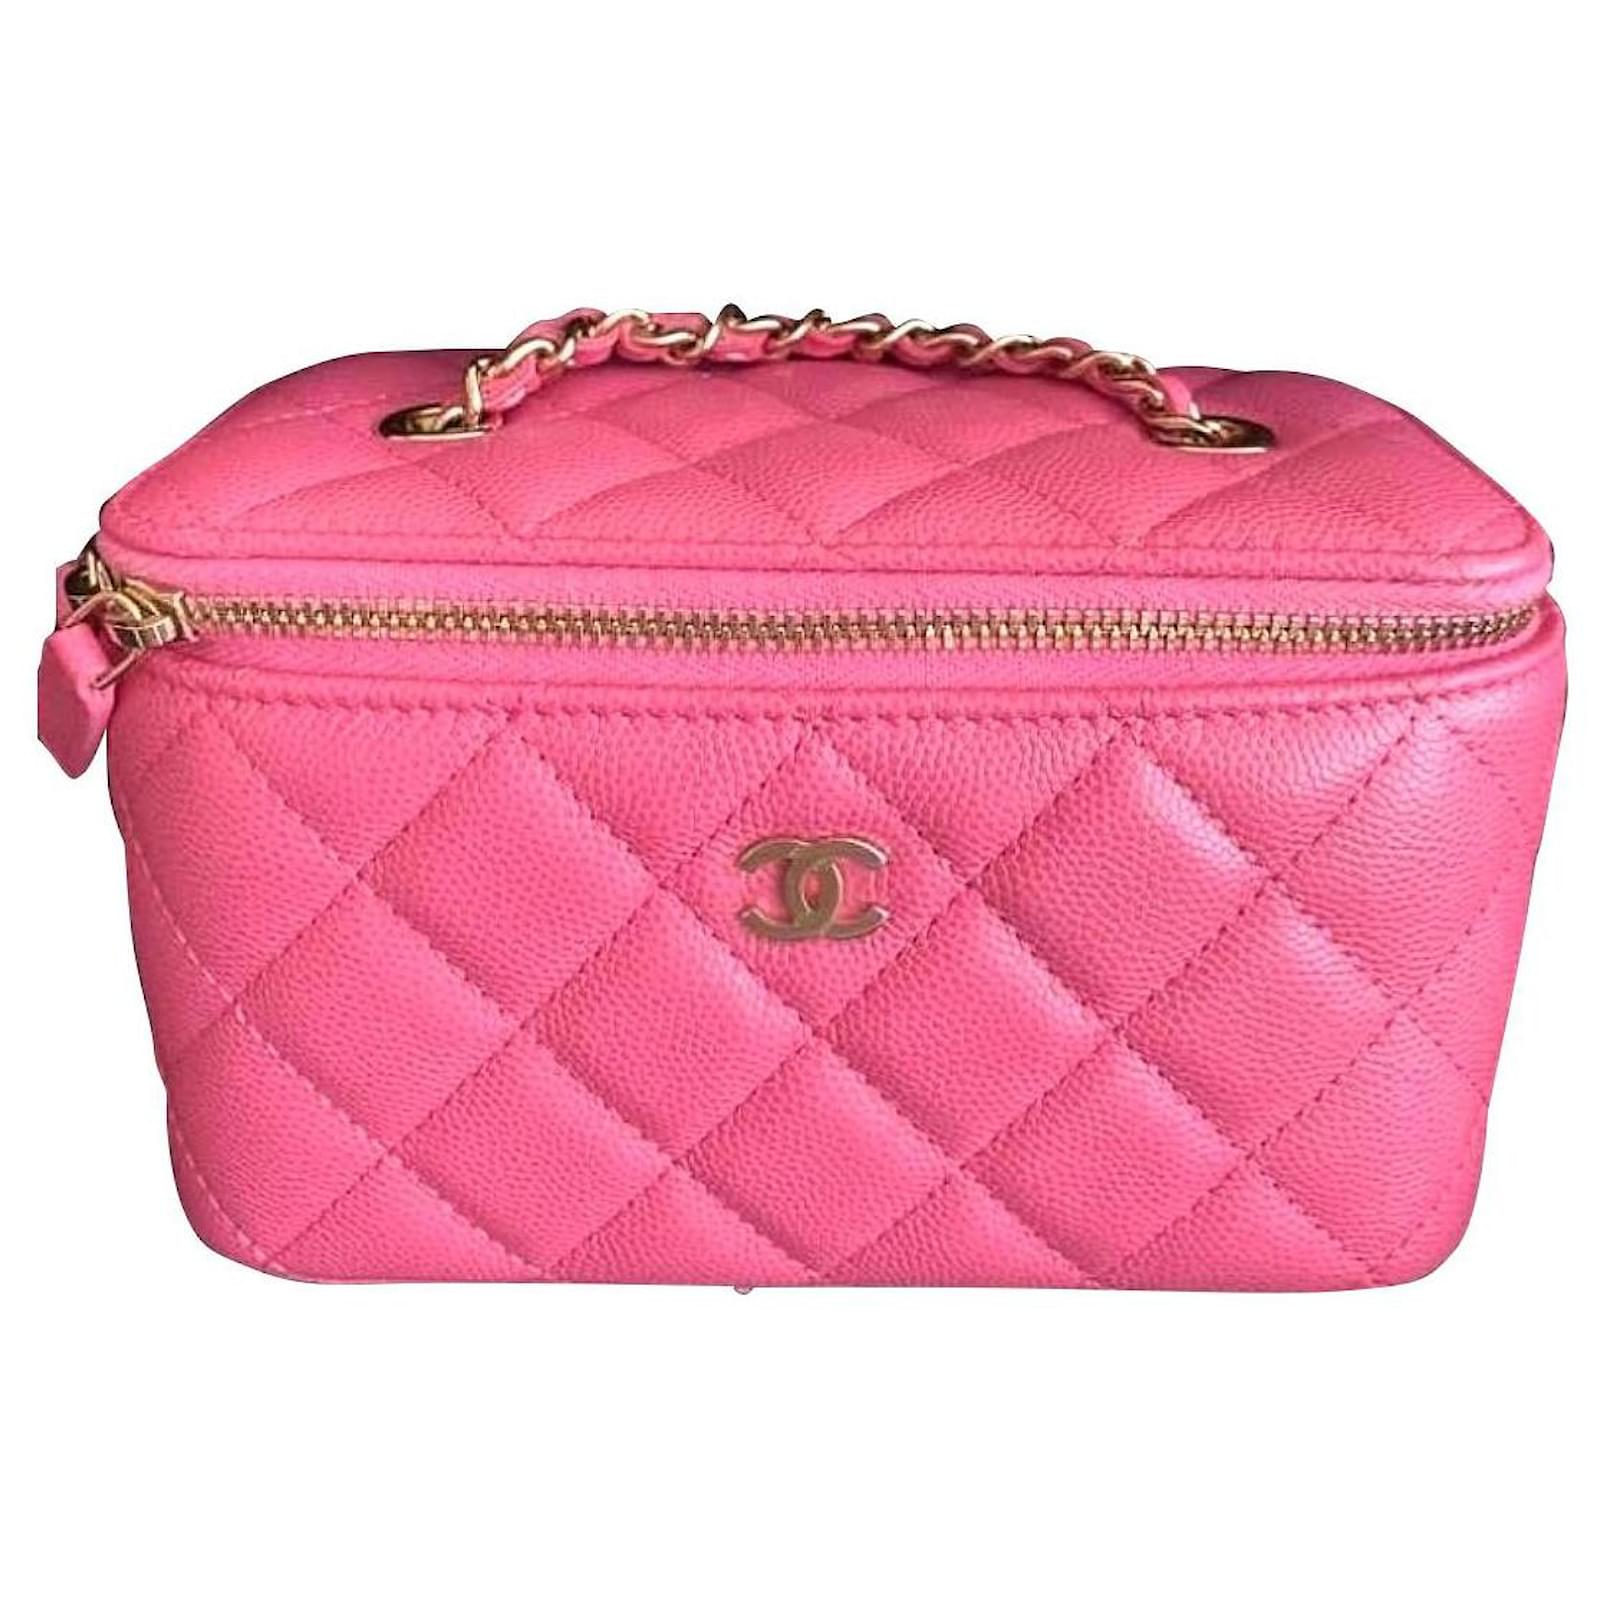 Chanel Pink Vanity bag